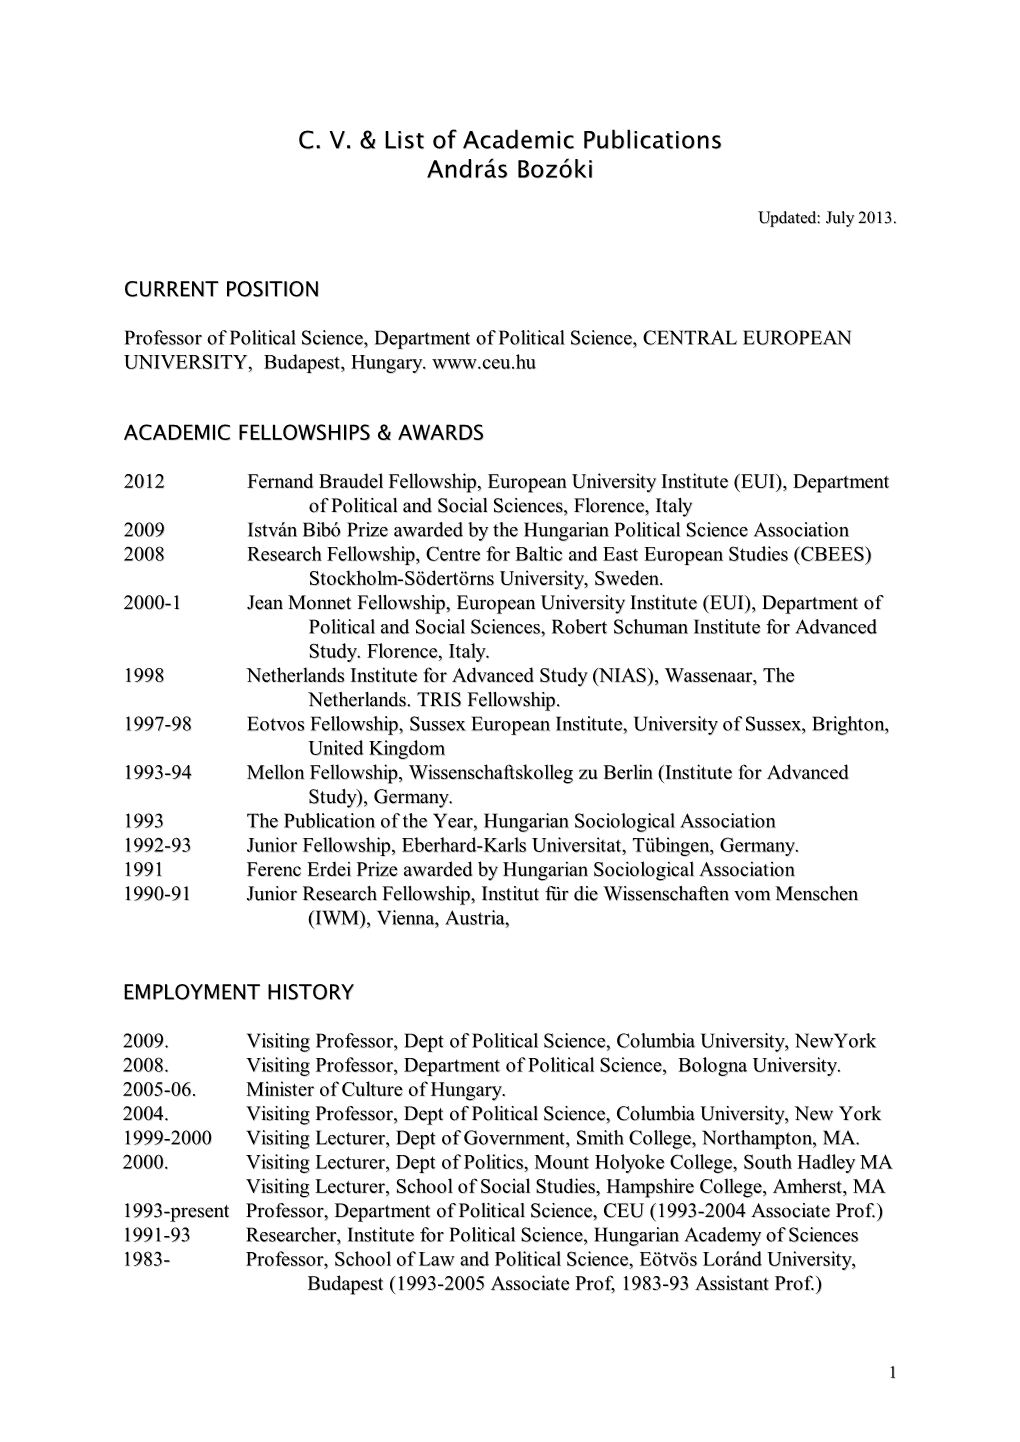 CV & List of Academic Publications András Bozóki